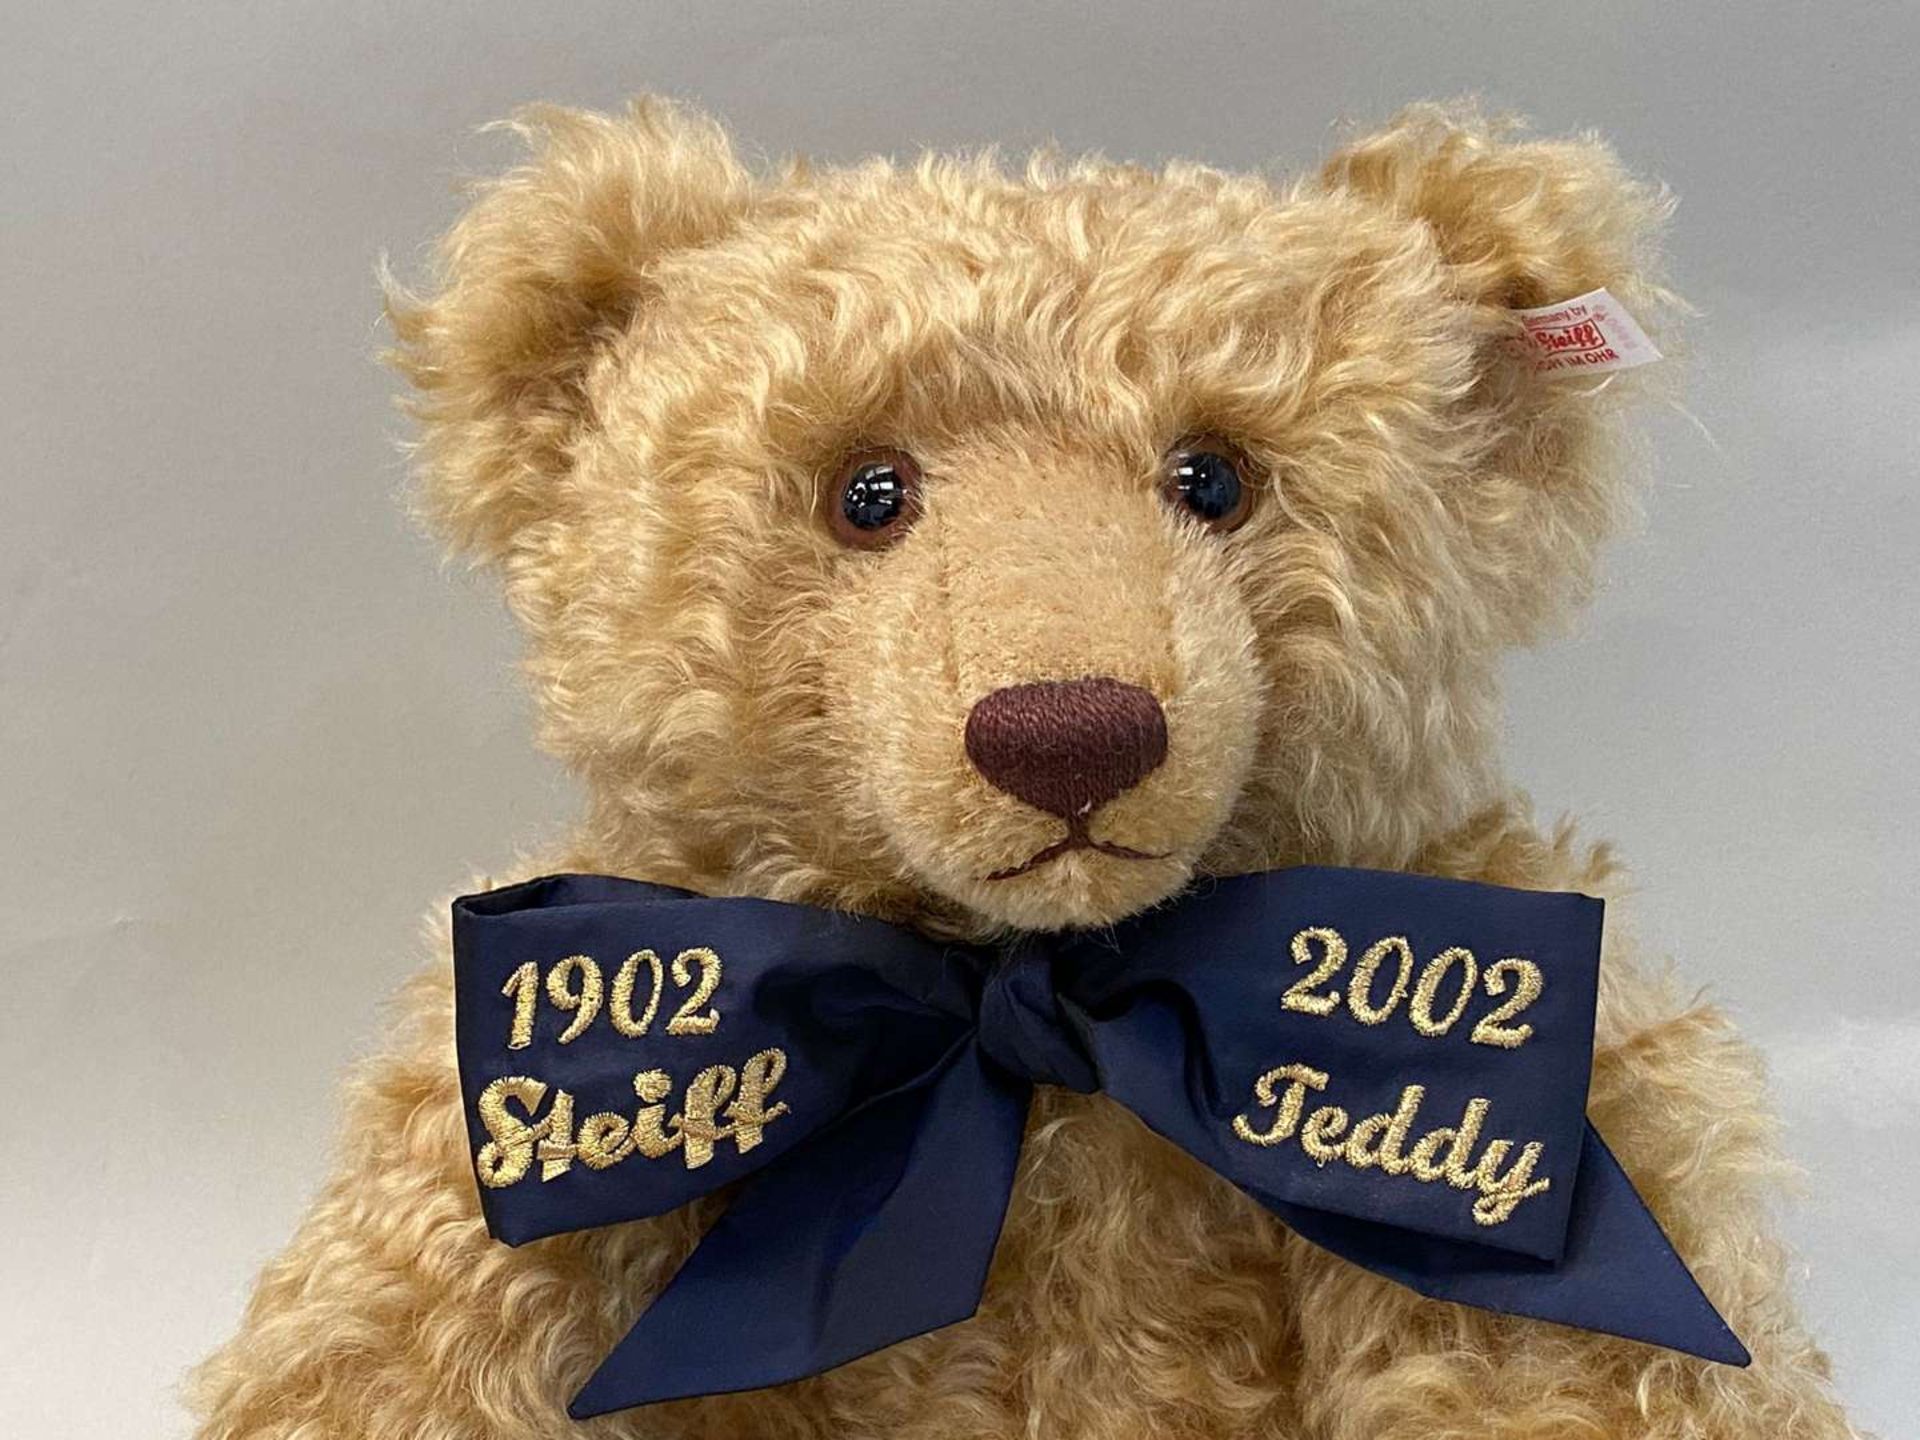 STEIFF, a 2002, Centenary Teddy Bear, Blond, 44 cm. No 006819 - Image 2 of 7